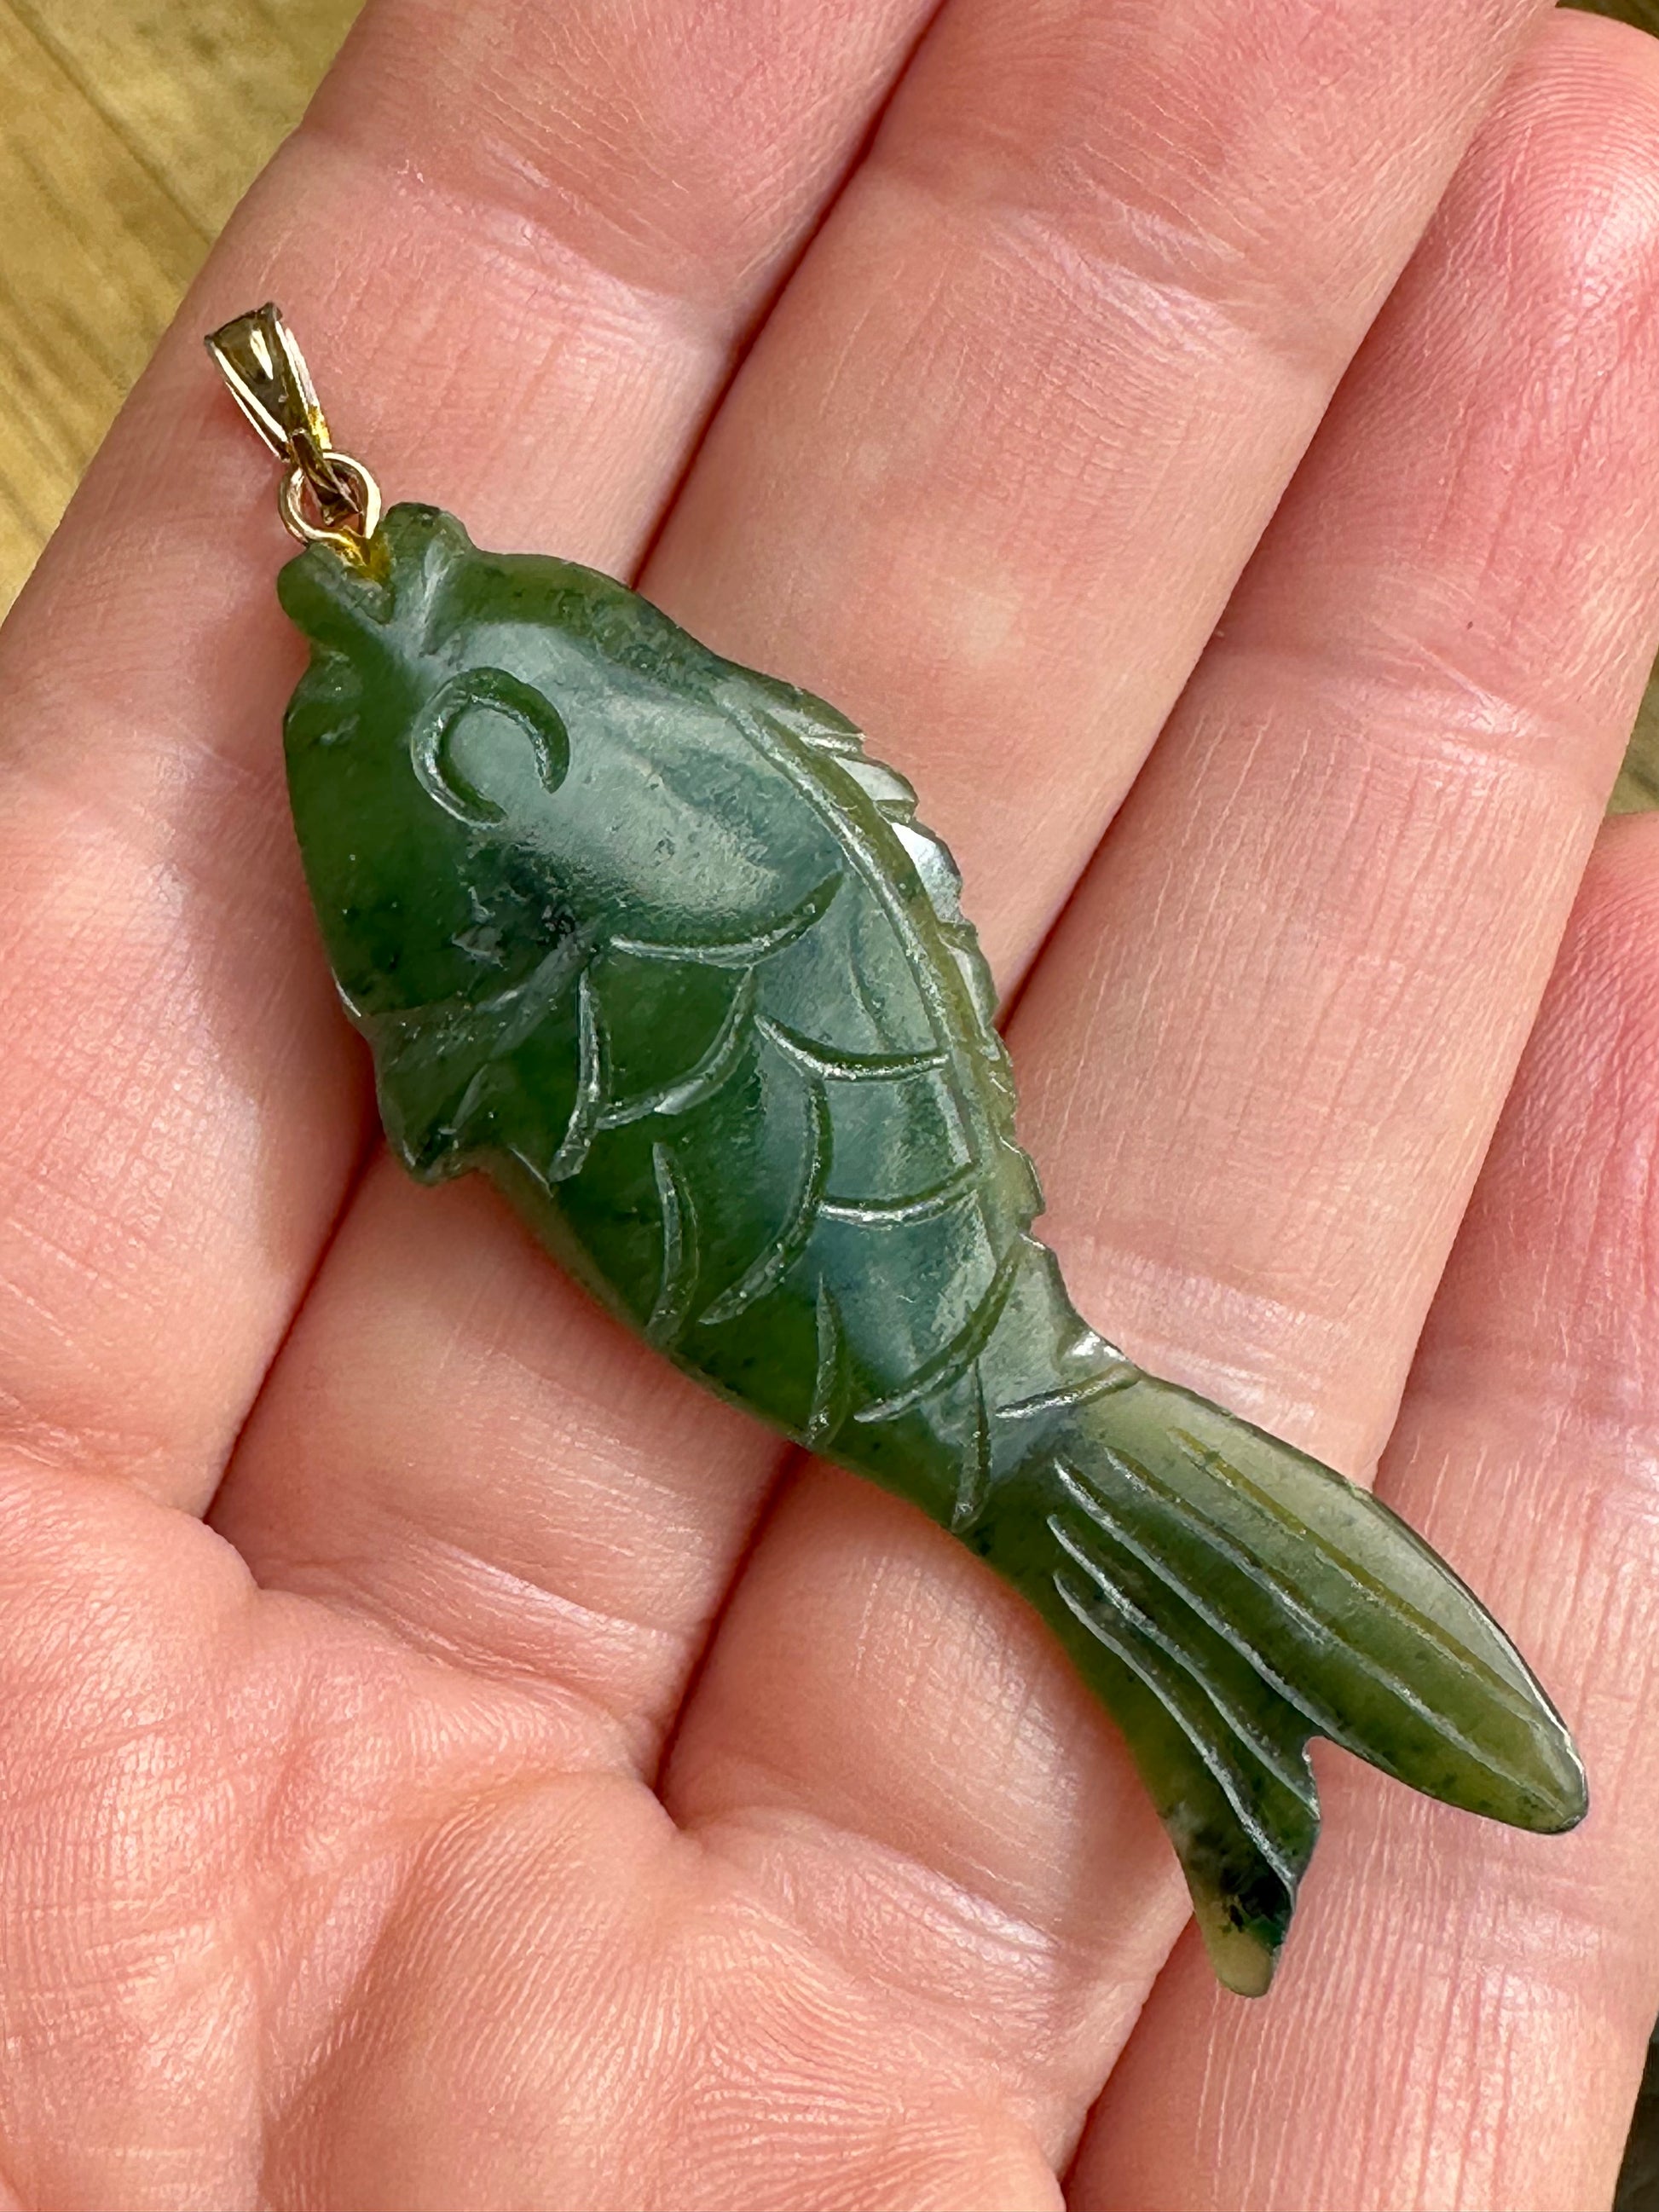 Australian Cowell green jade fish blessing charm 